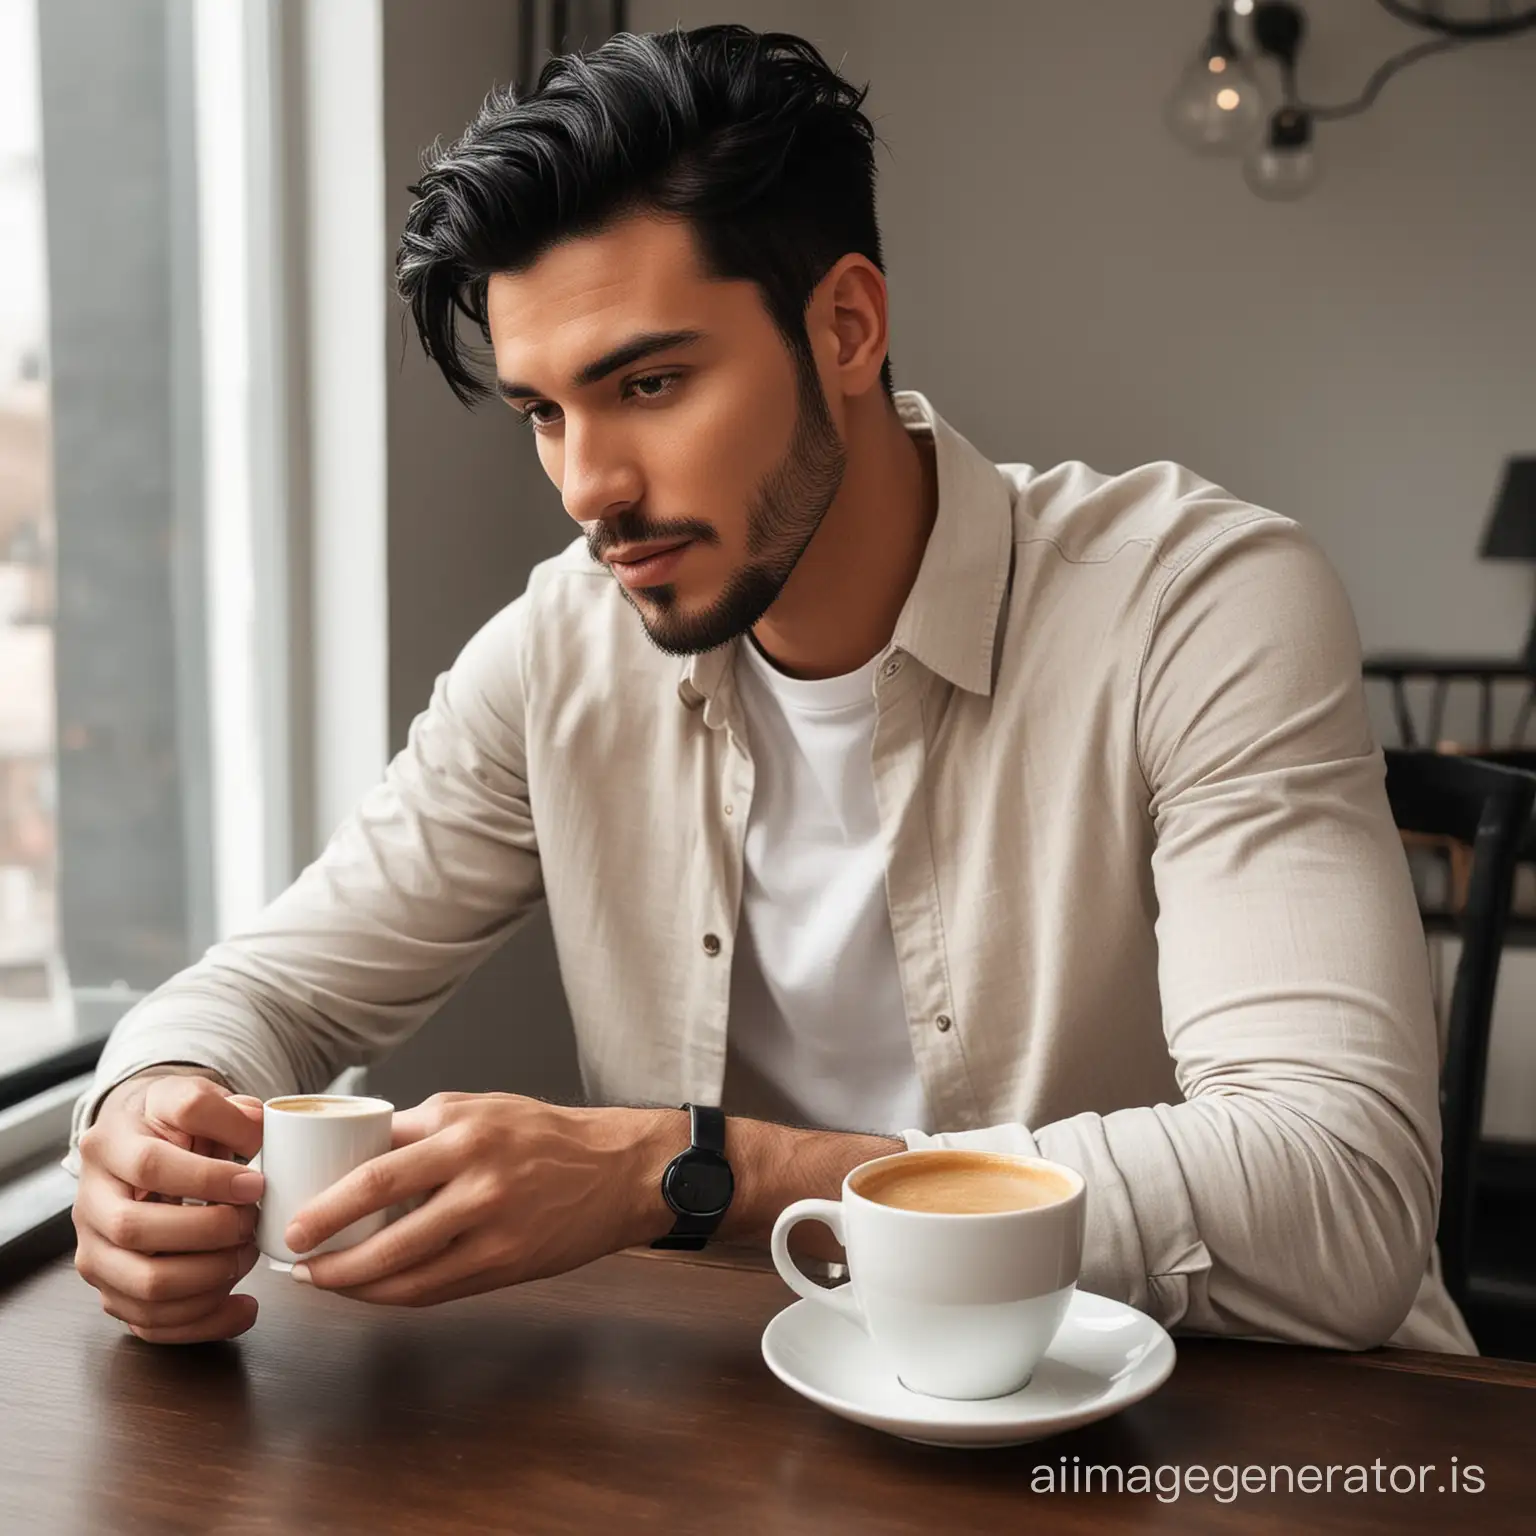 A stylish black hair man in coffe tea on the table